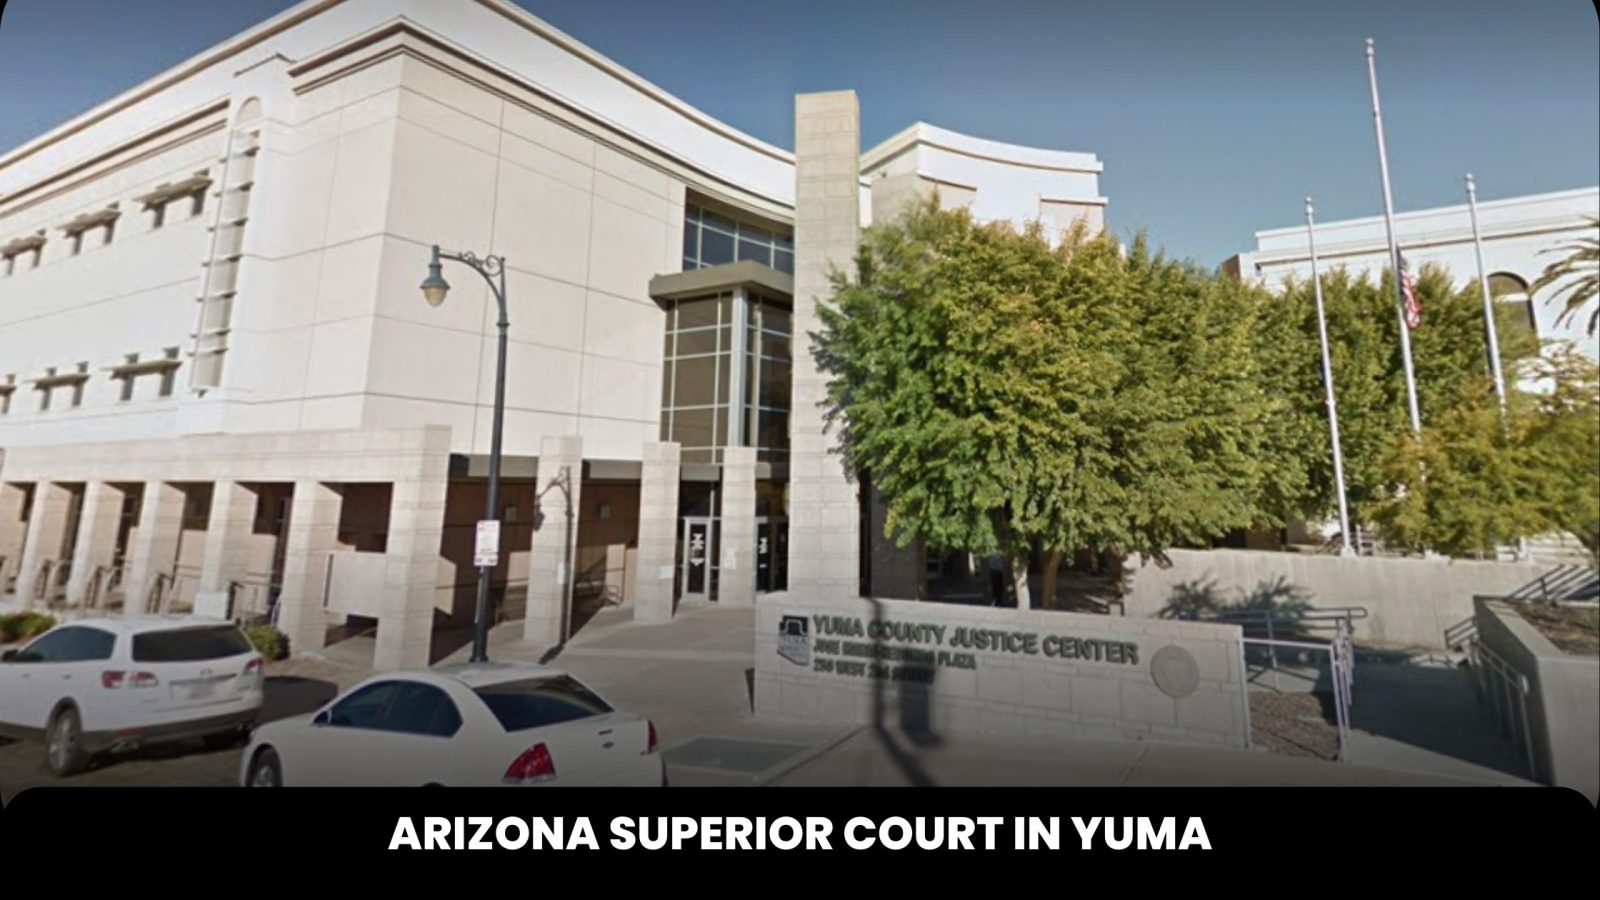 Arizona Superior Court in Yuma